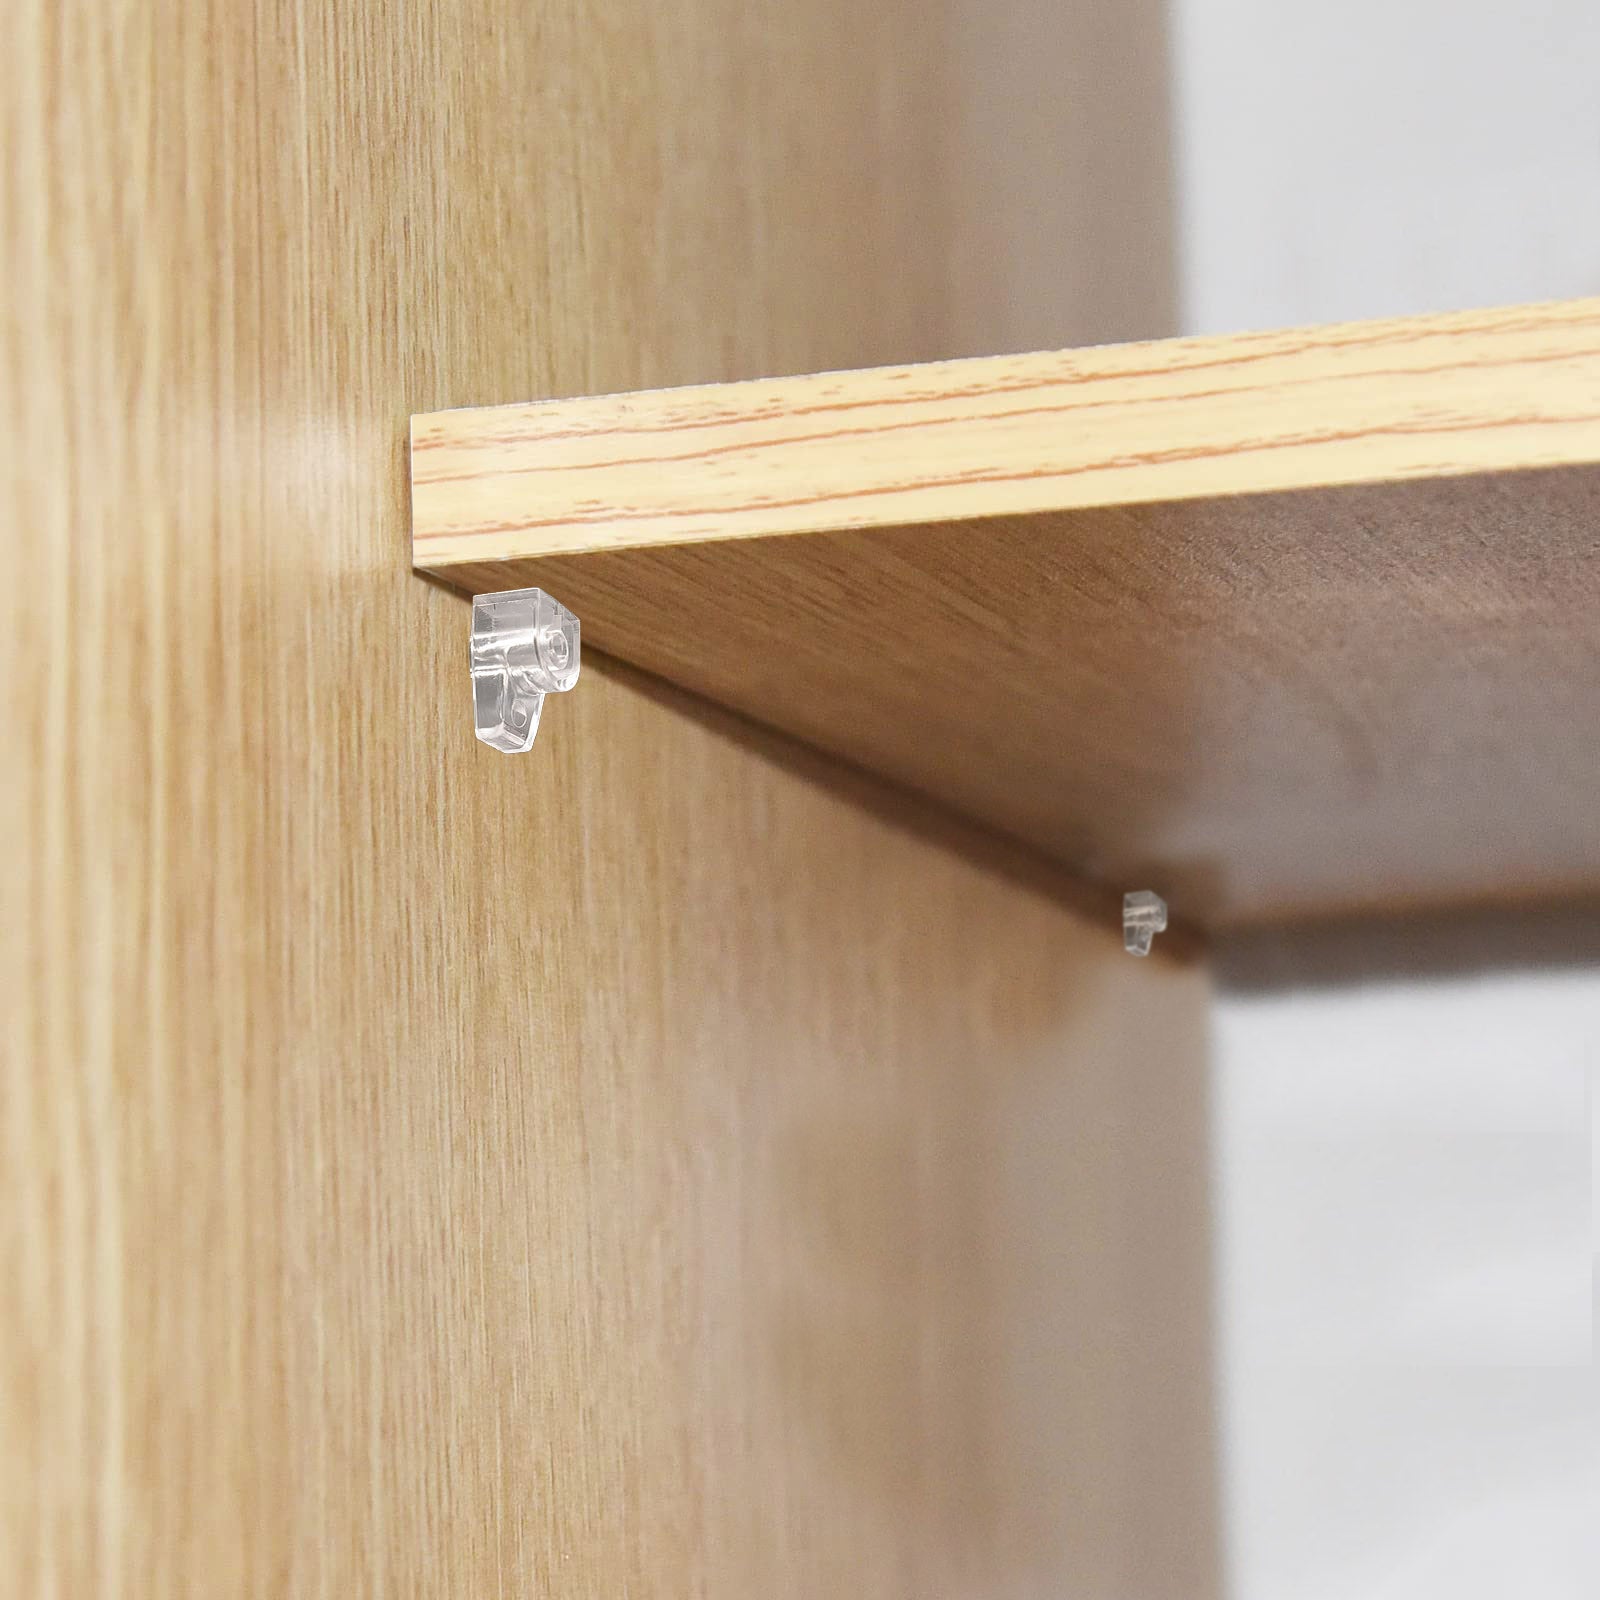 Metal Headed Crystal Shelf Support Pins | Shelf Holder Pins for Cabinet (100Pcs, Transparent)